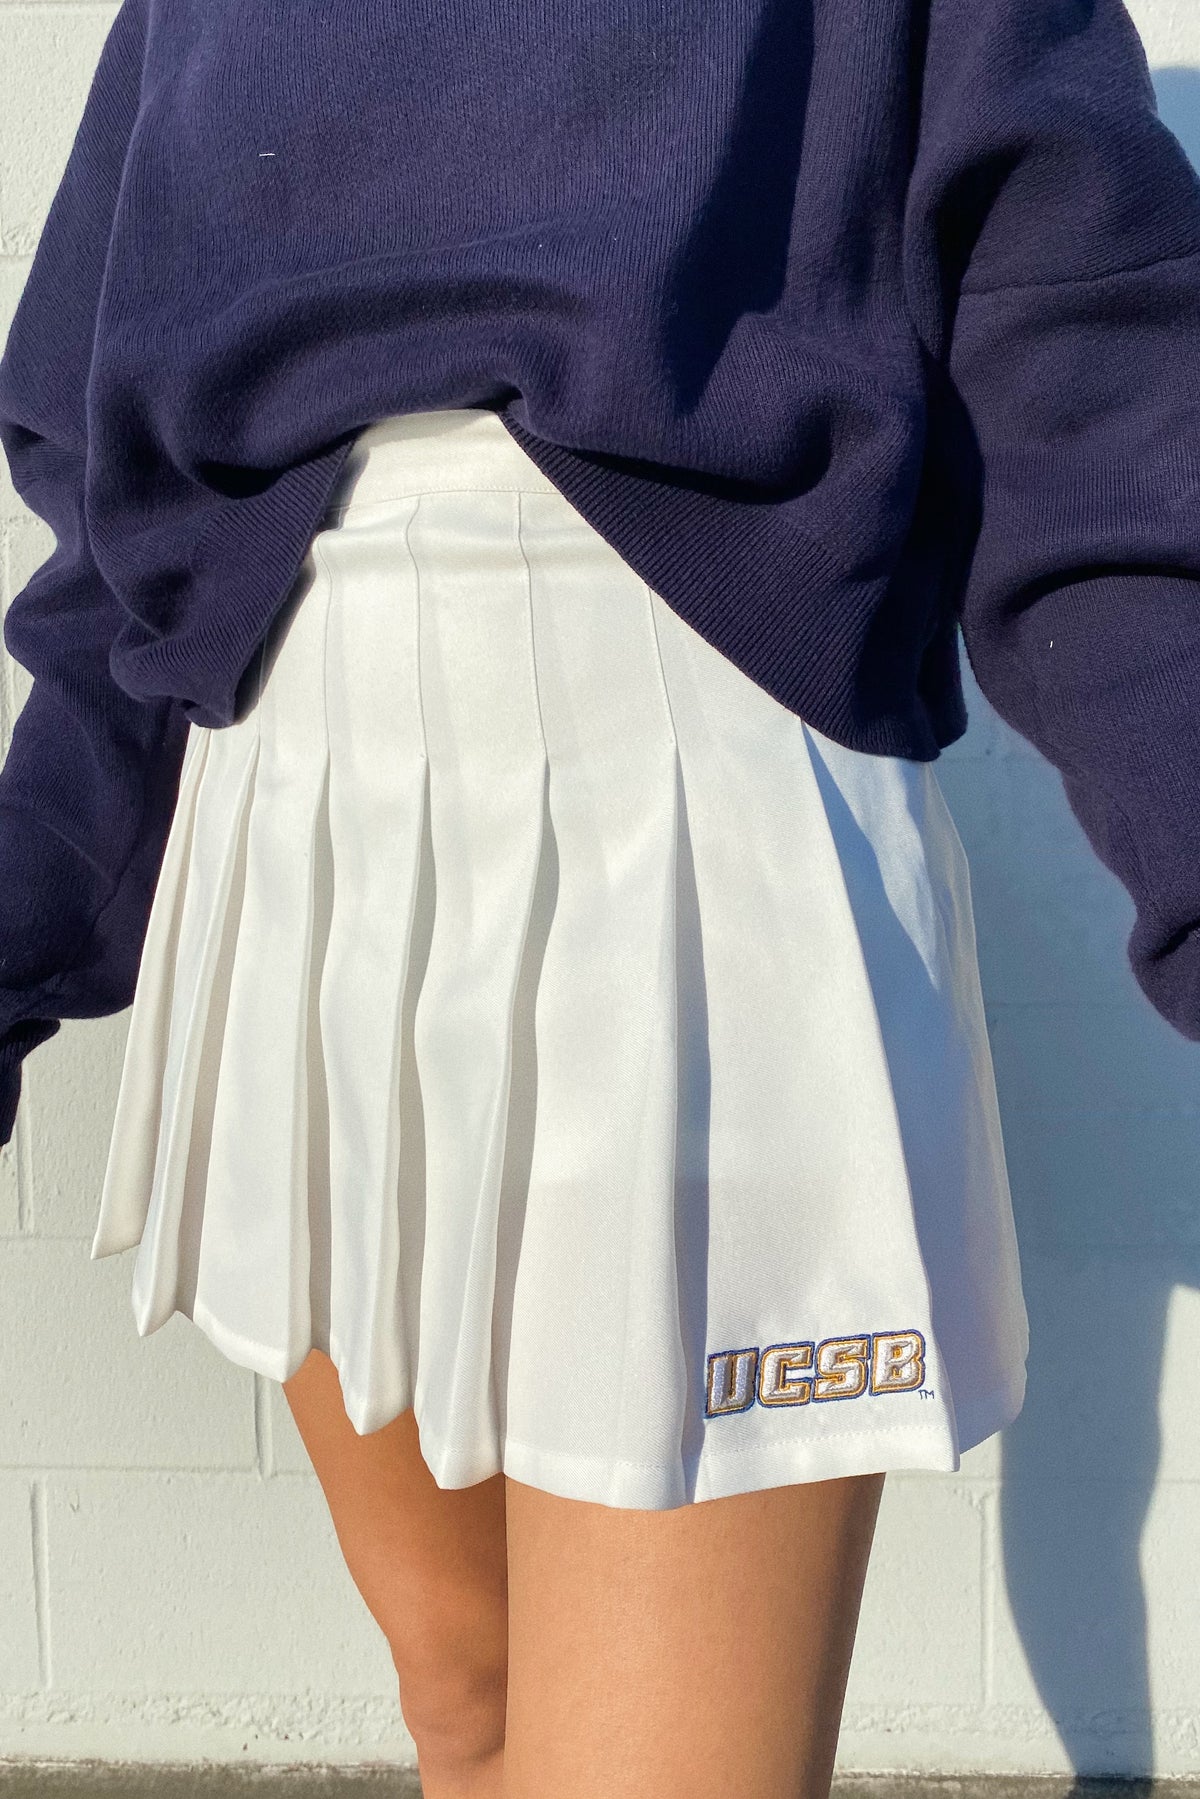 UCSB Tennis Skirt